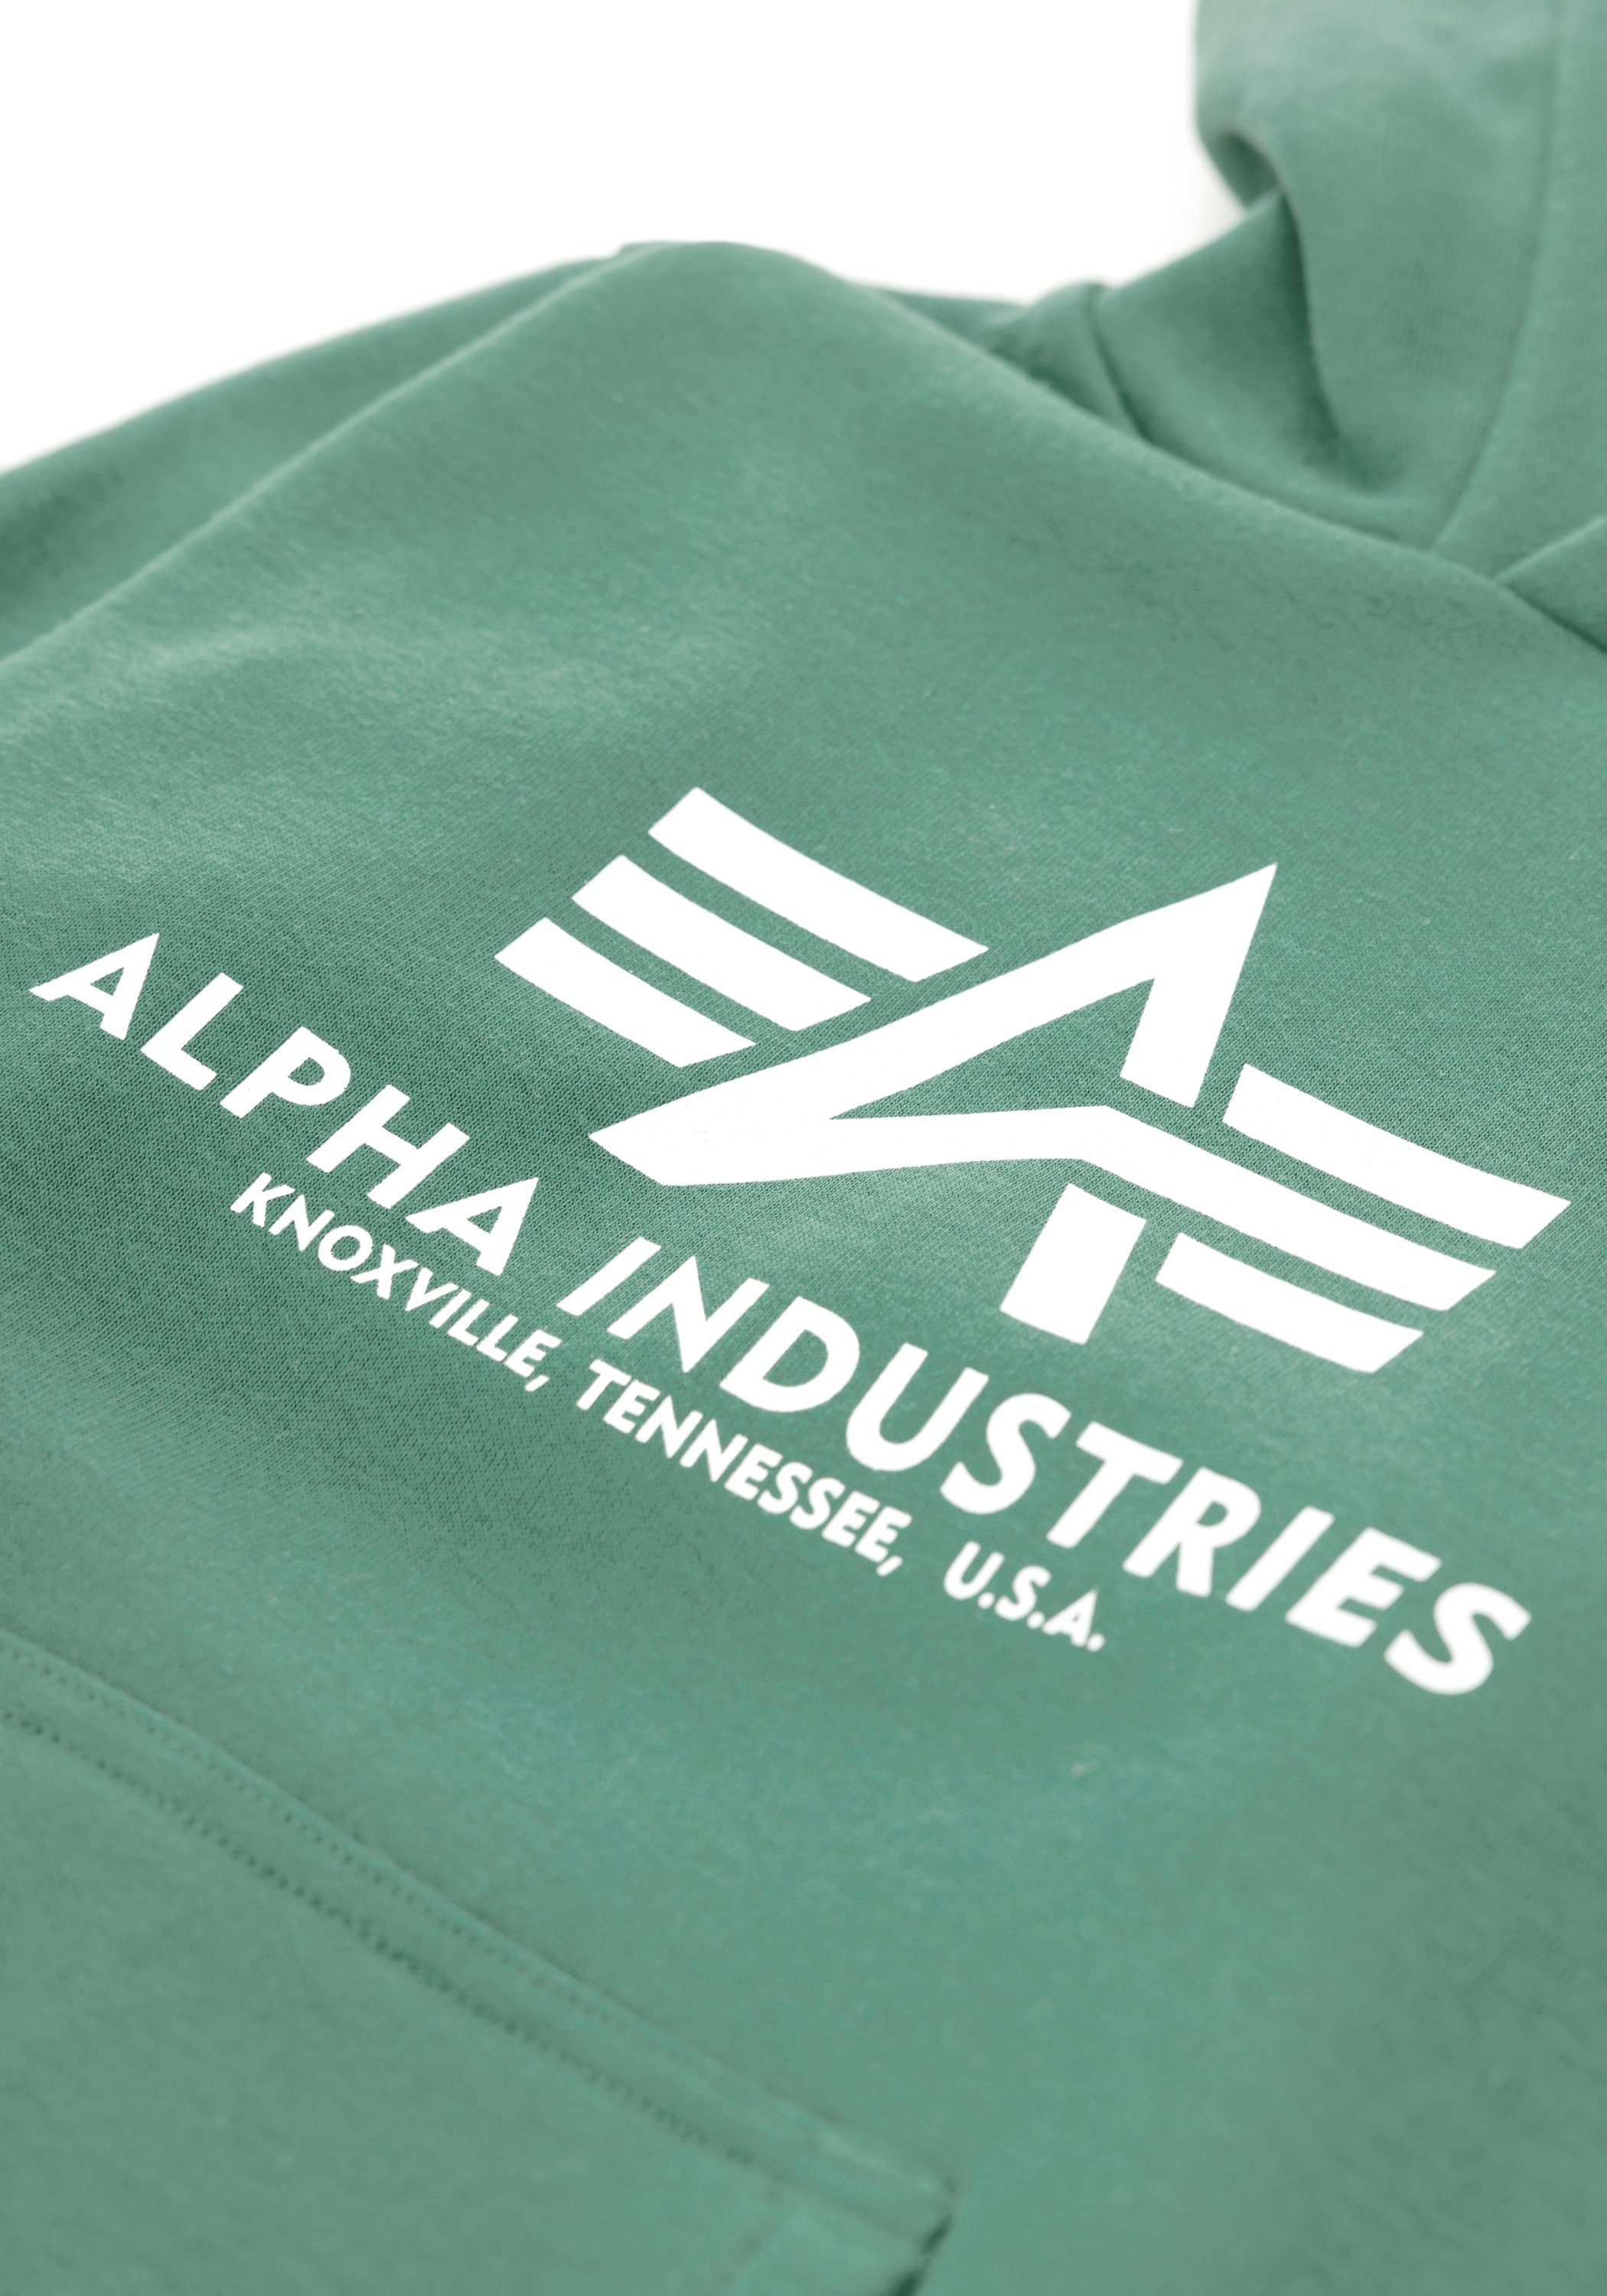 Alpha Industries Alpha Industries ivy Kids/Teens Basic - Hoodies Kapuzenshirt green Hoody Kids